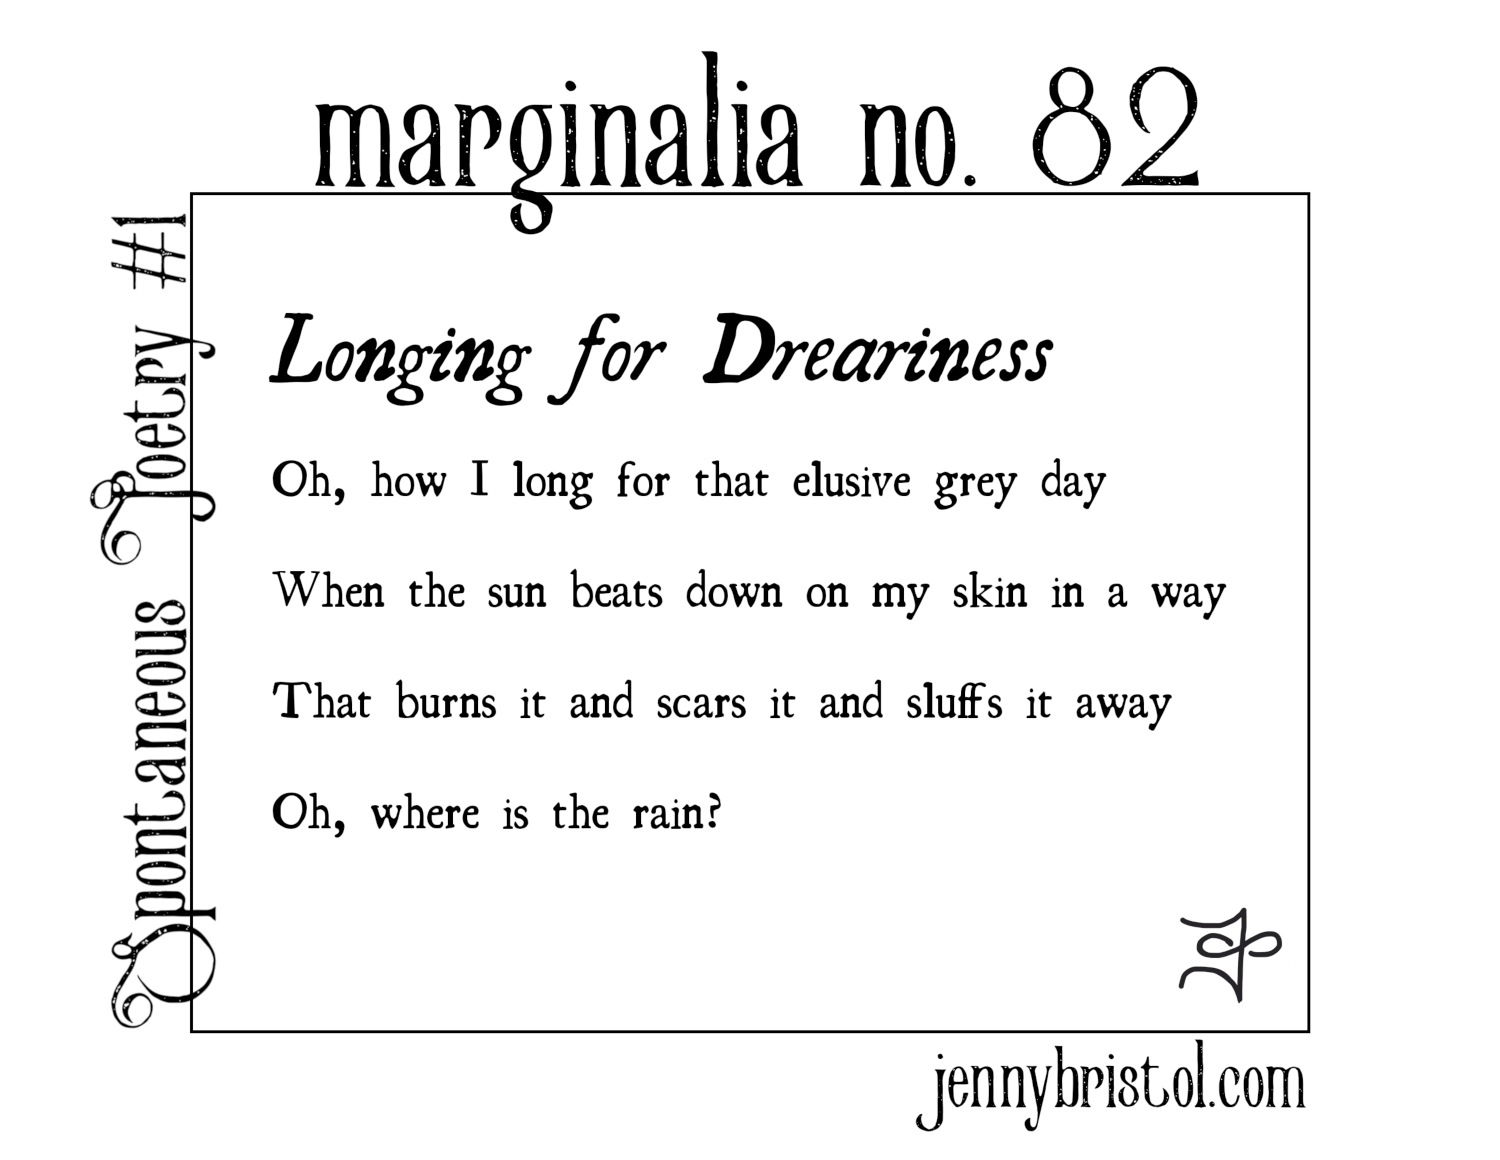 Marginalia no. 82 to post